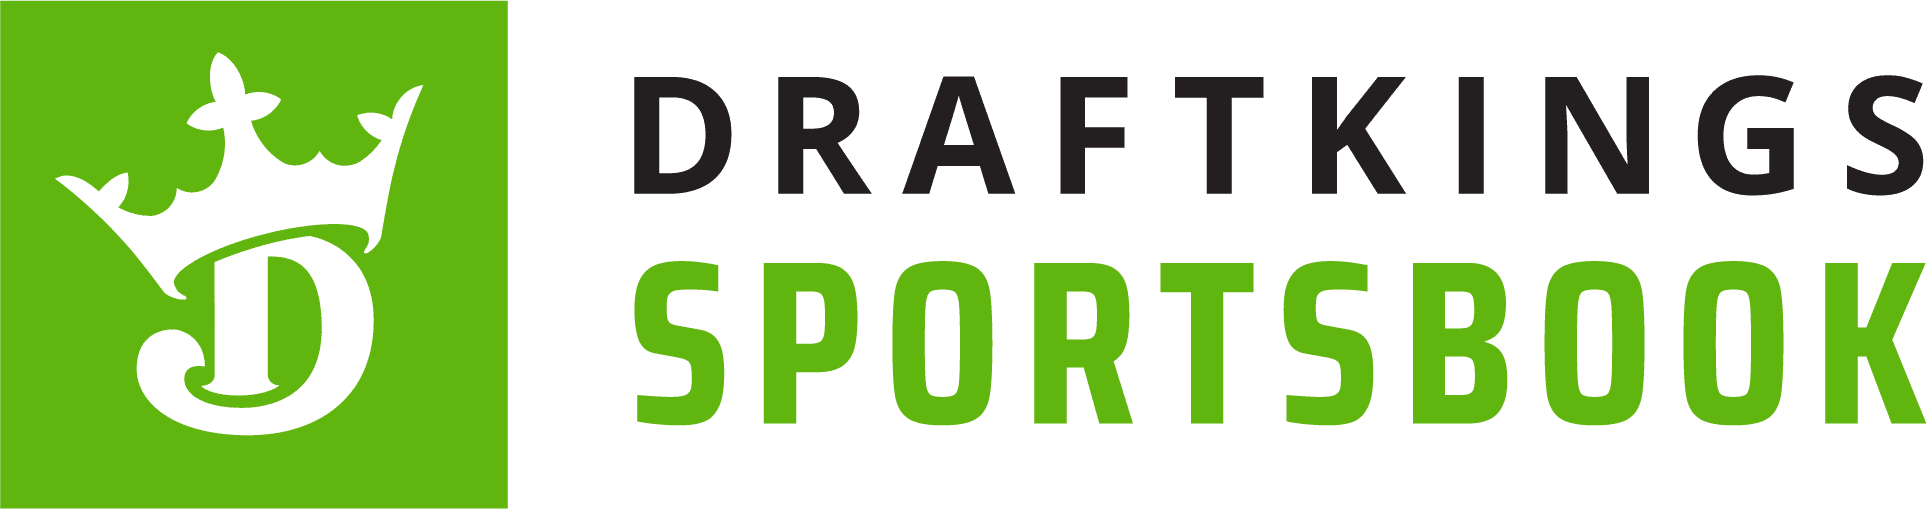 DraftKings Sportsbook Logo Transparent